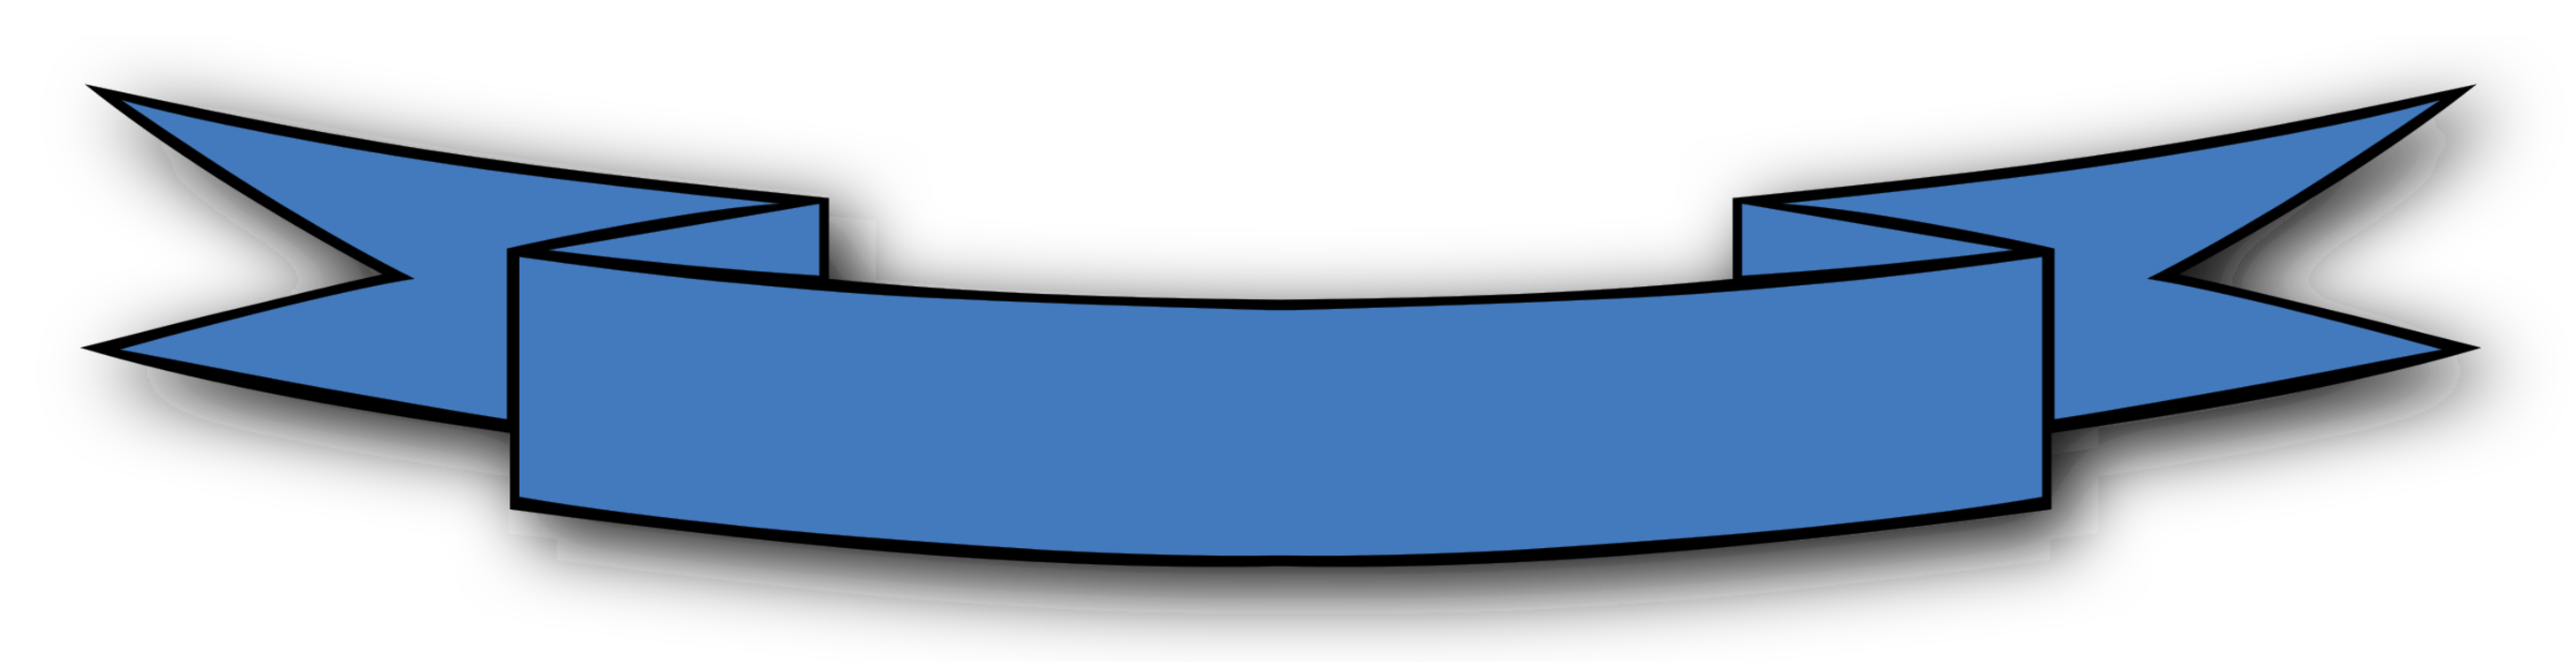 blue ribbon banner